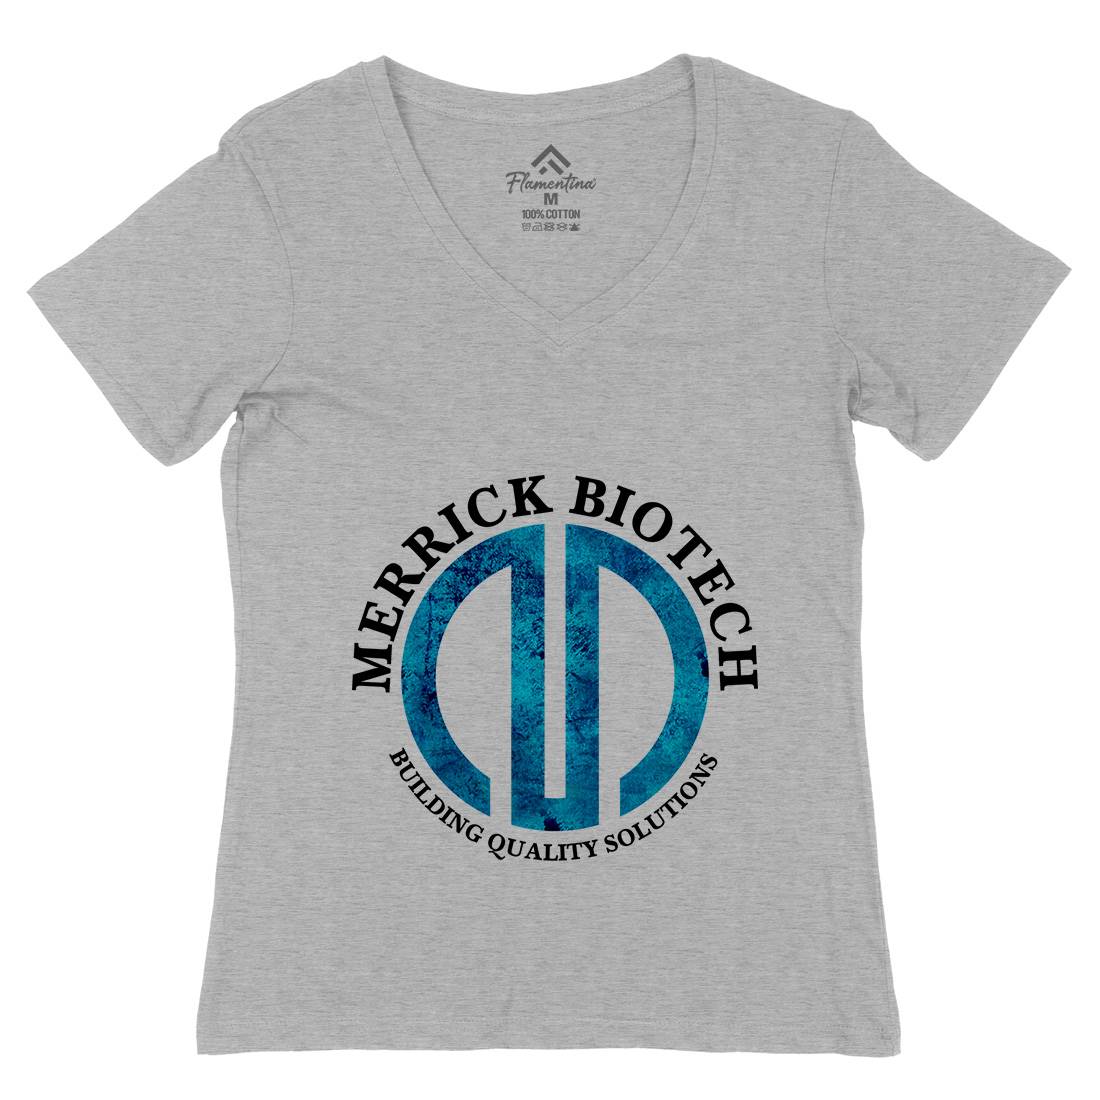 Merrick Biotech Womens Organic V-Neck T-Shirt Space D393